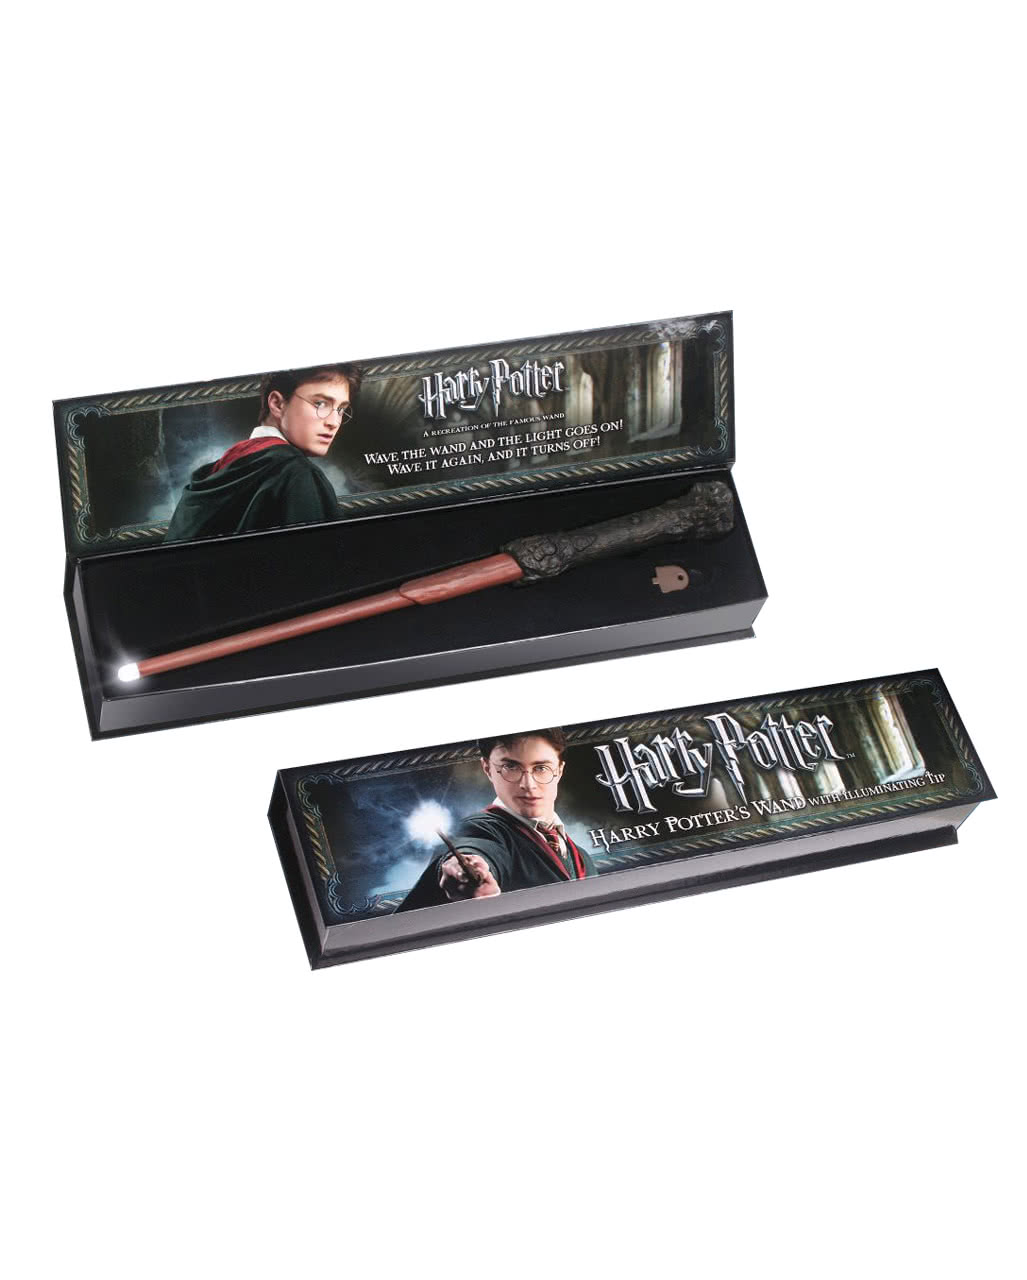 LED Harry Potter LED zauberstab Magic Wand Leuchtzauberstab Dumbledore Boxed